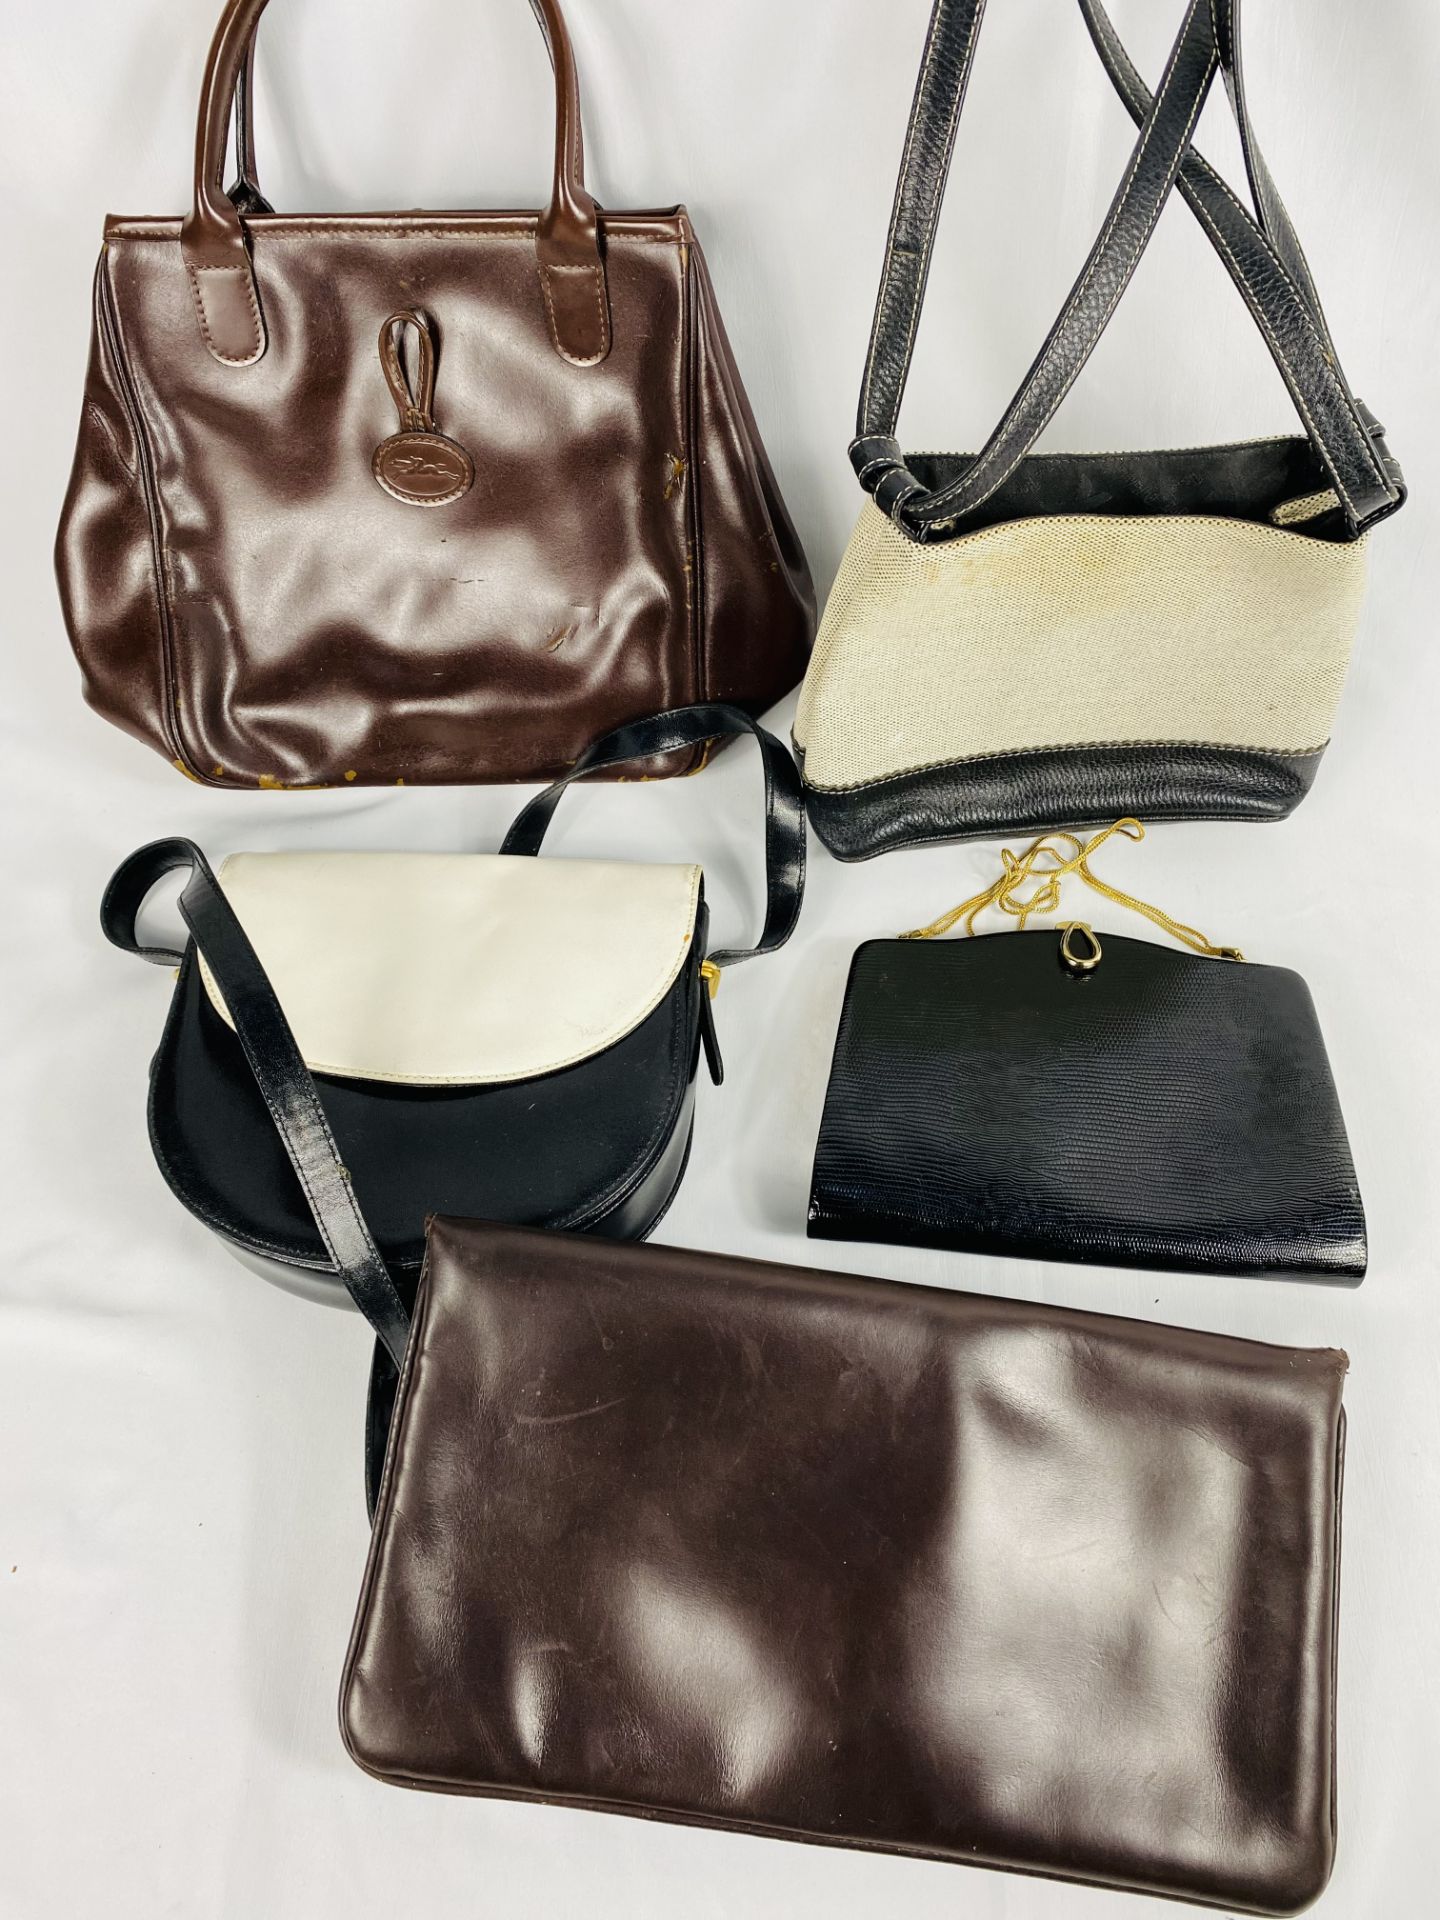 Five fashion handbags - Image 2 of 3